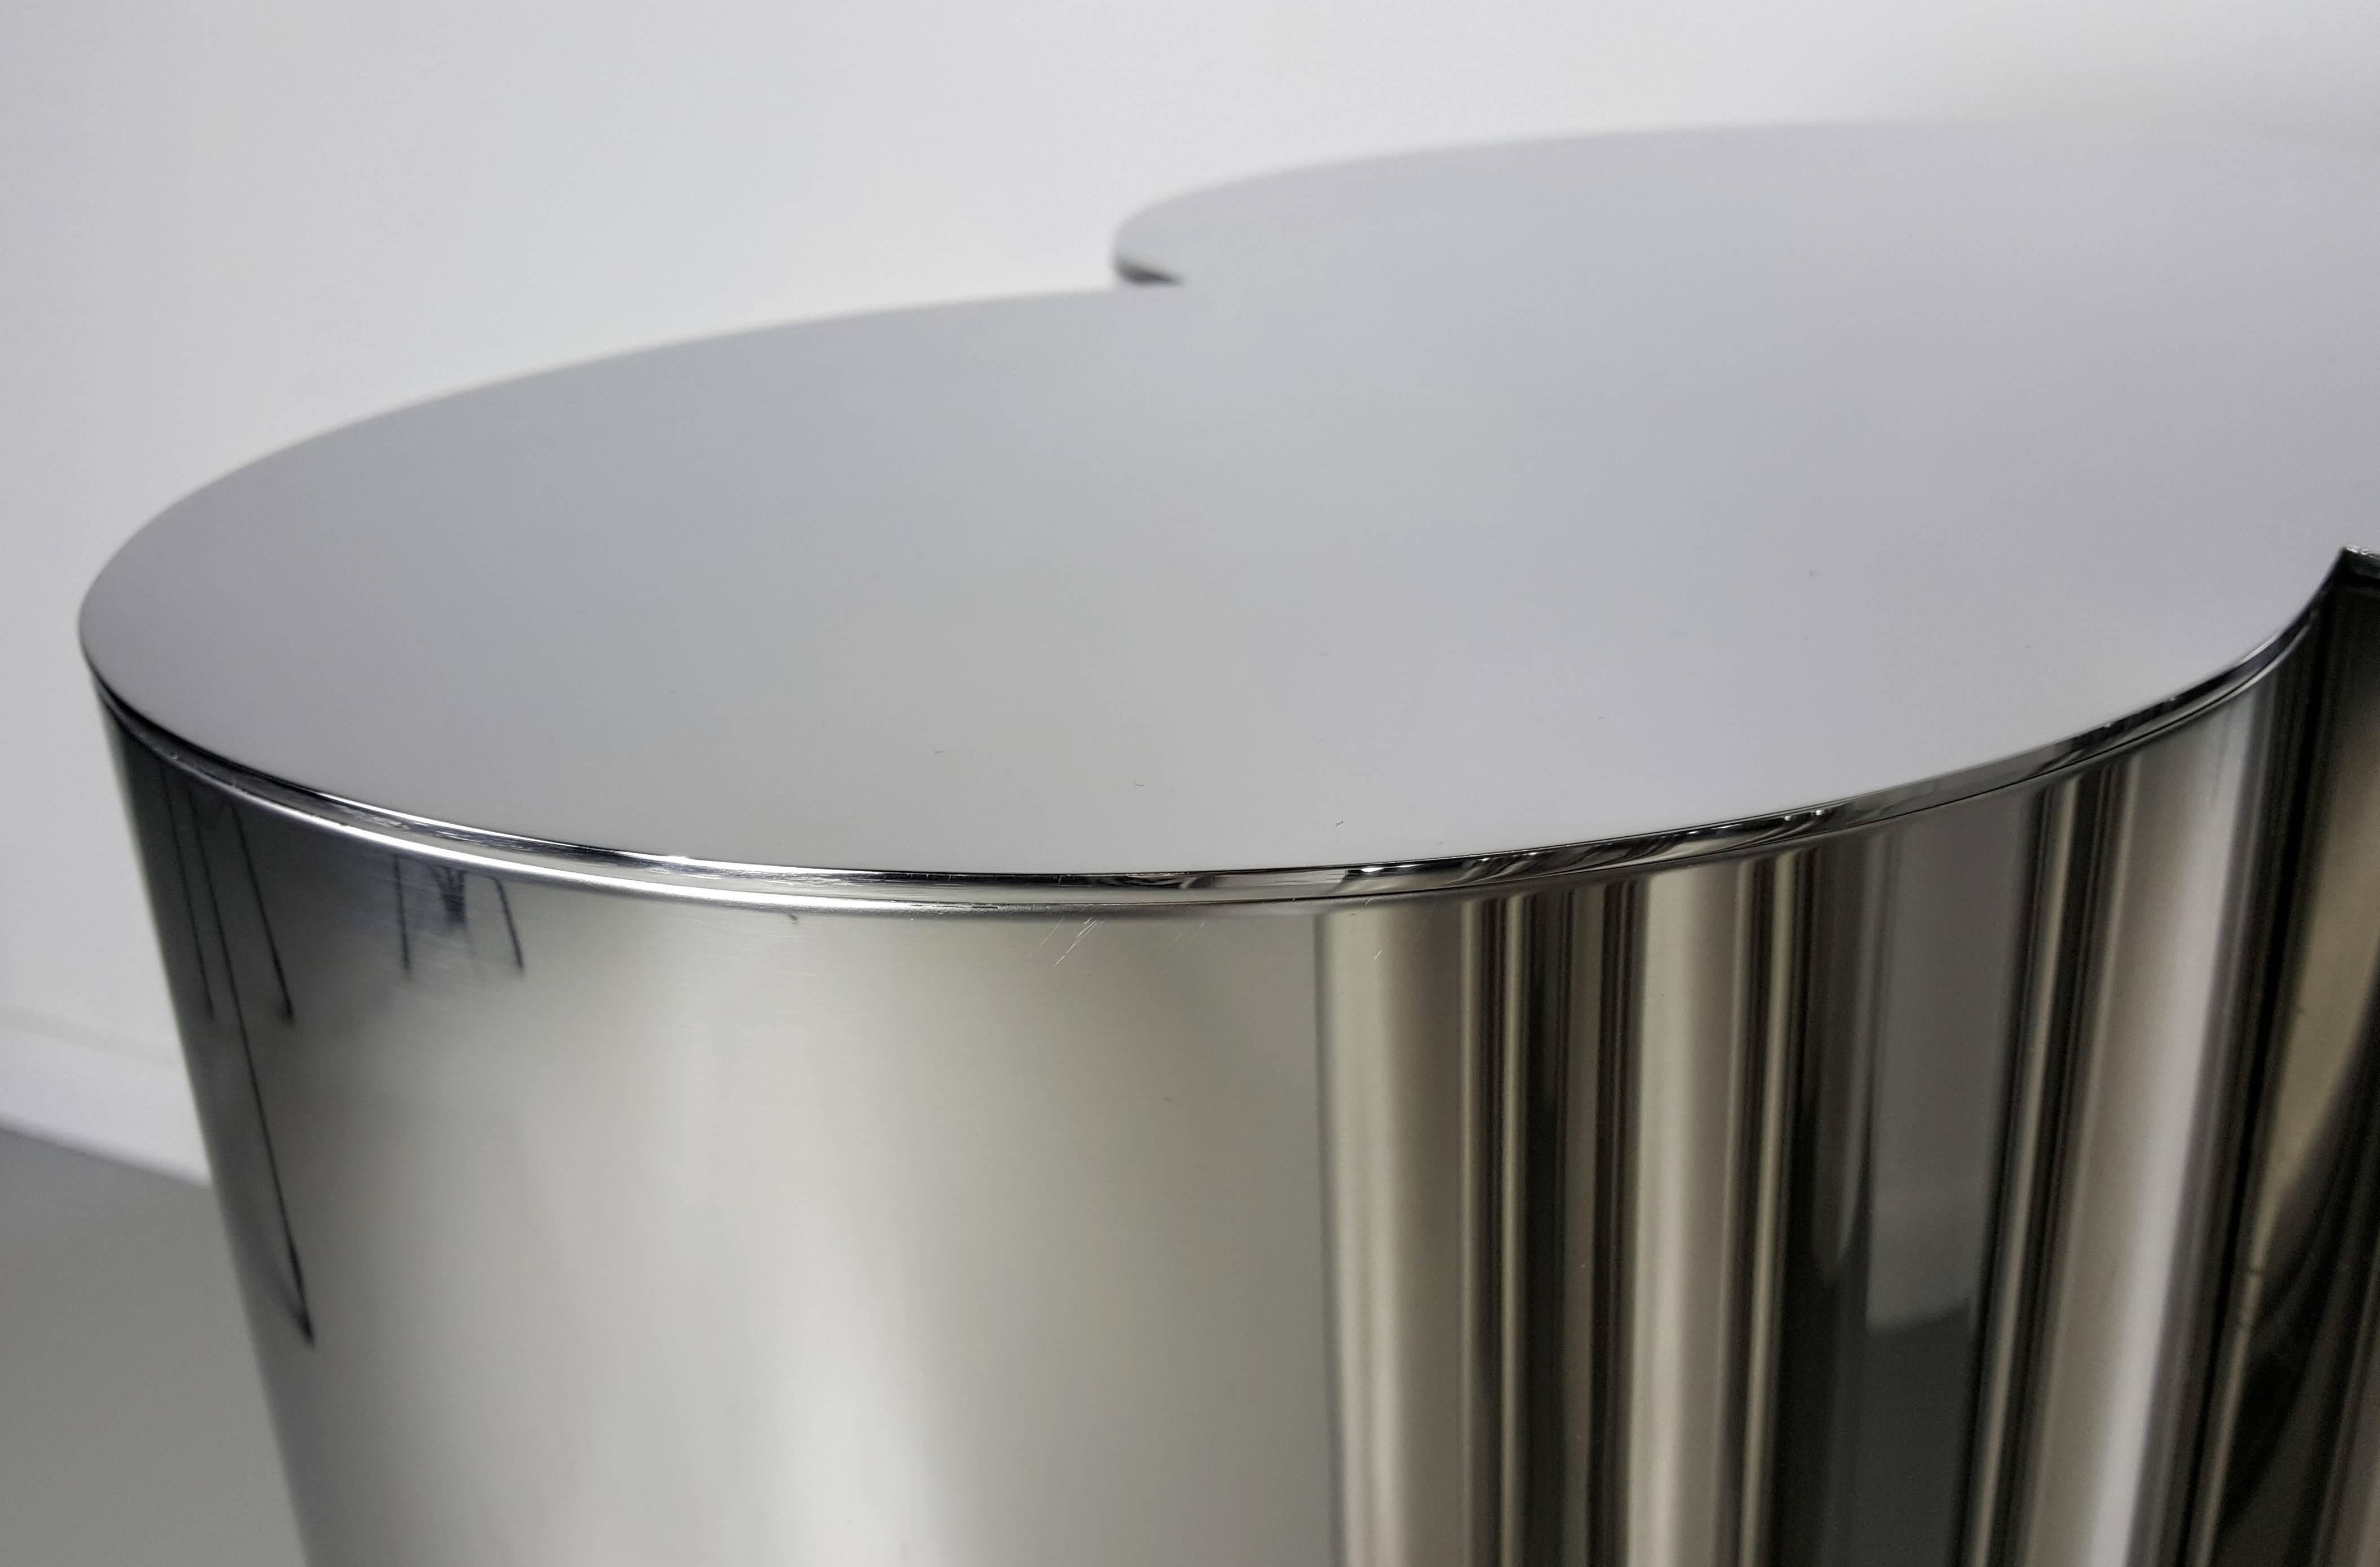 American Pair of Custom Trefoil Dining Table Base Pedestals in Mirror Stainless Steel